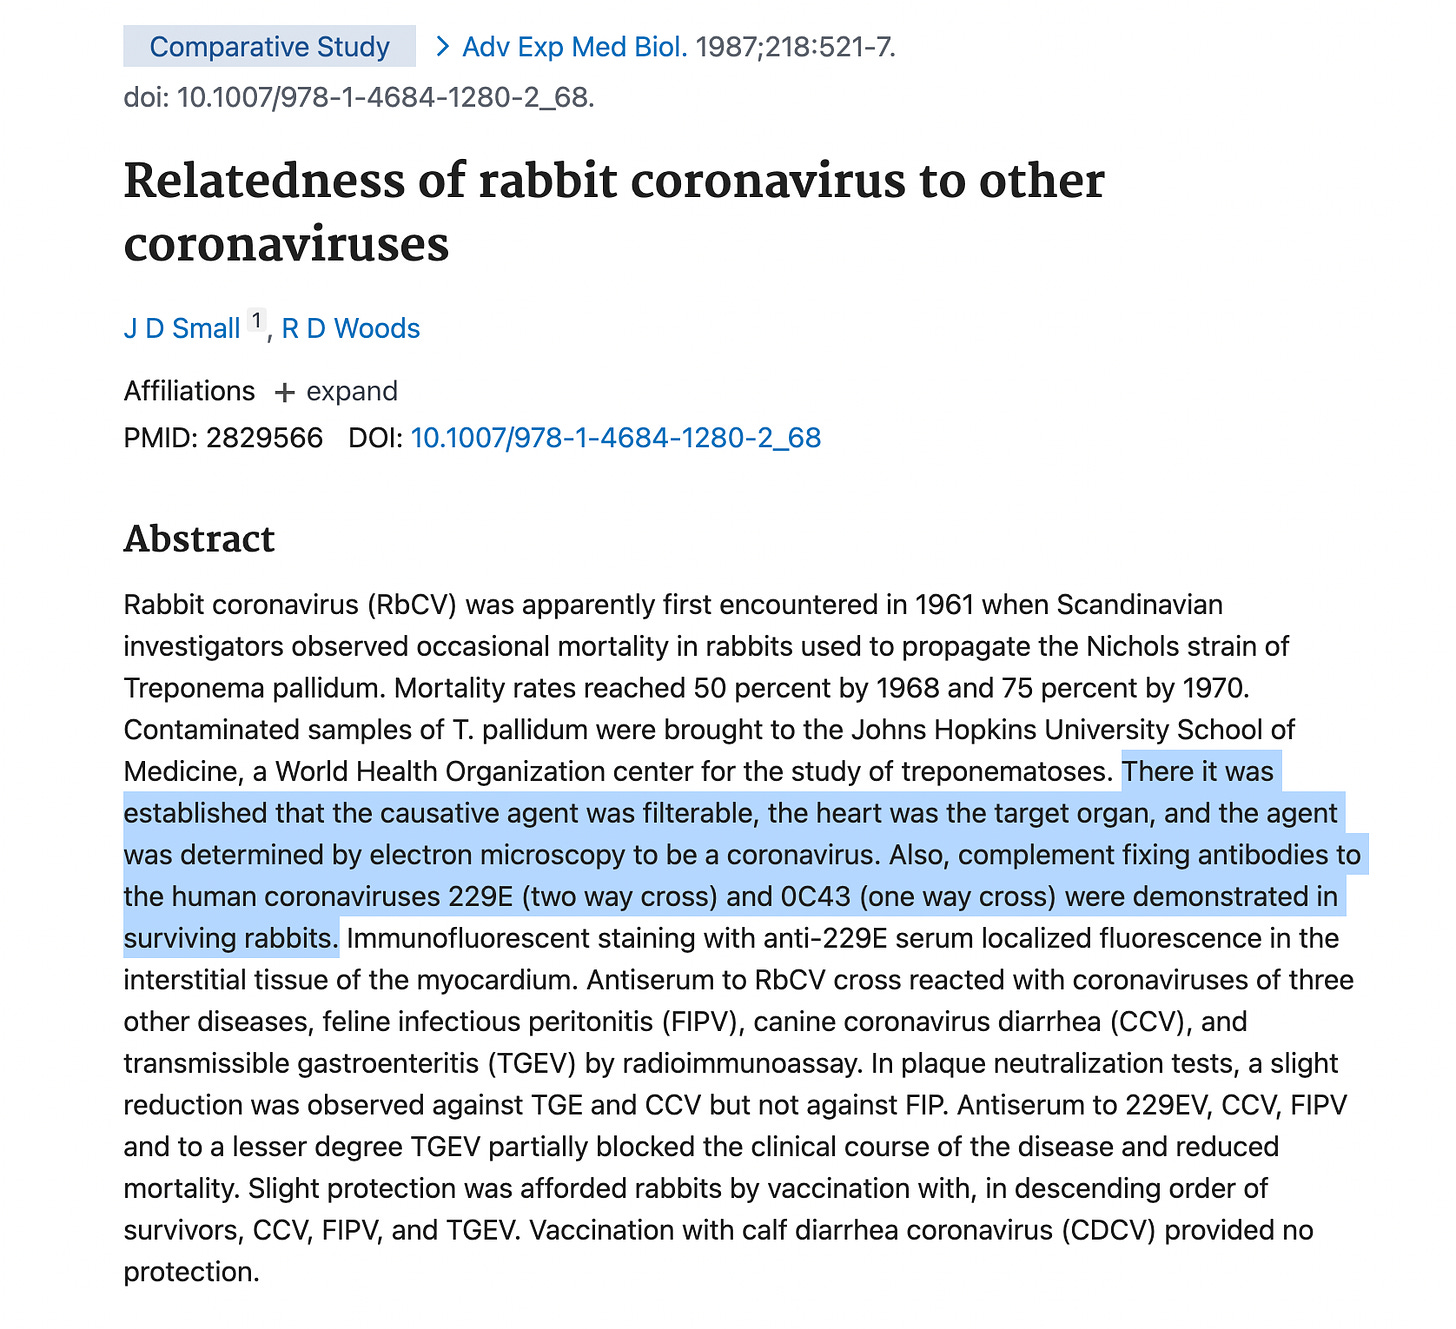 1987 Pub Med Study on Rabbit Coronaviruses and the Heart